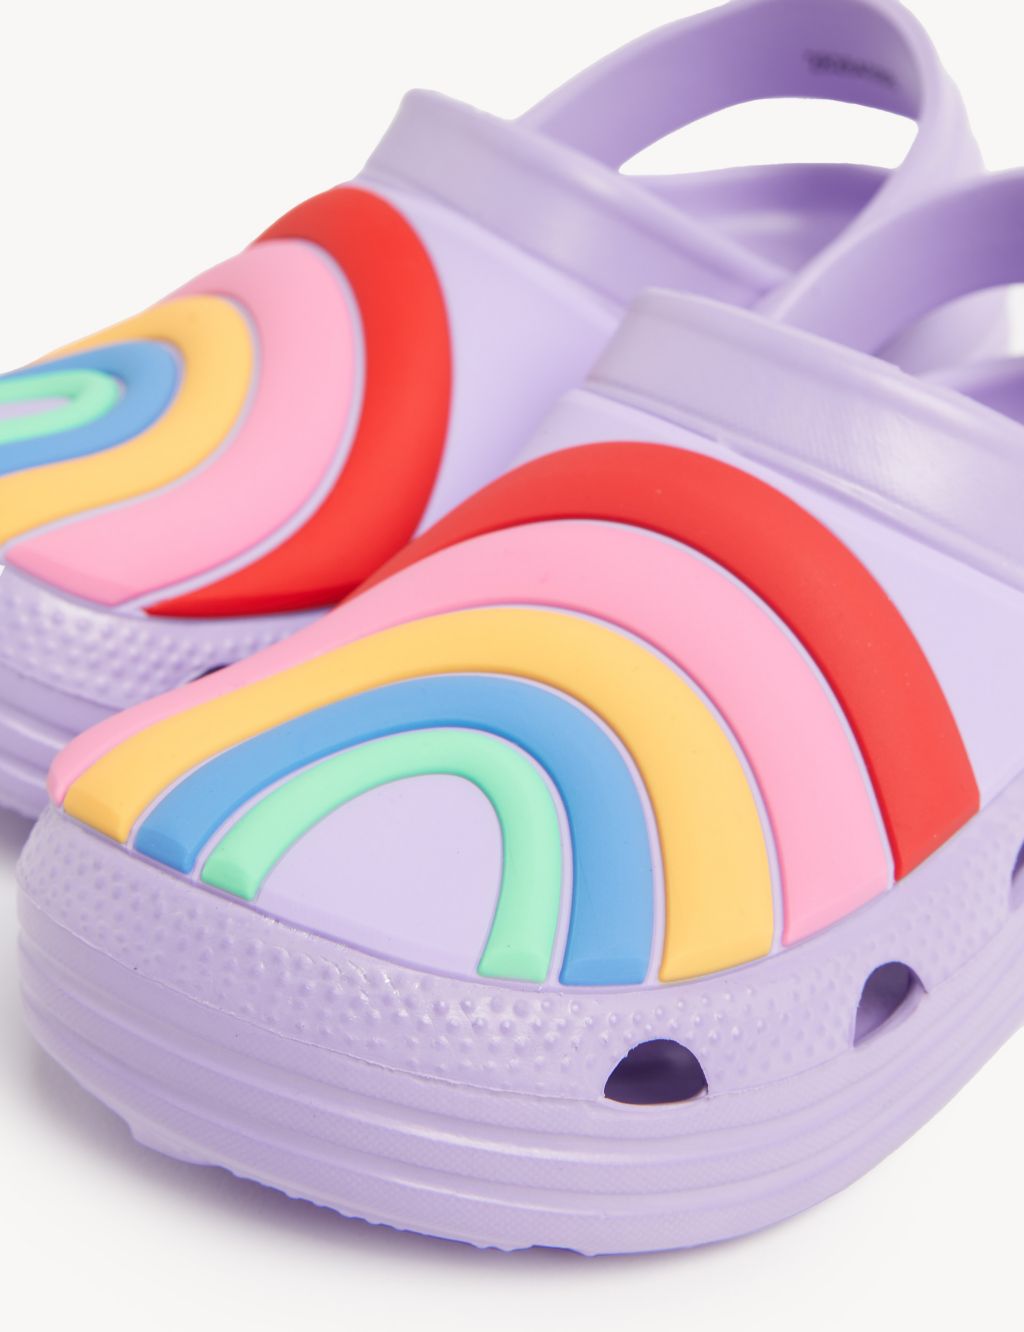 Kids' Rainbow Clogs (4 Small - 13 Small) image 2